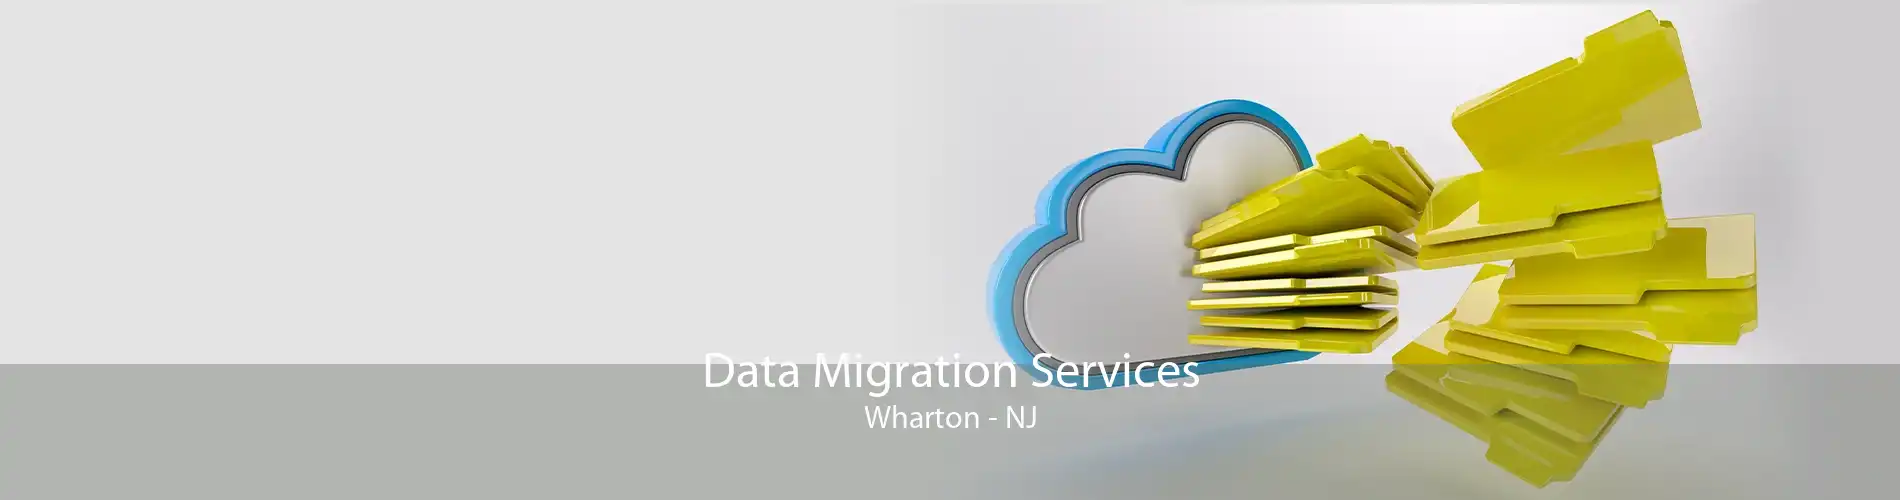 Data Migration Services Wharton - NJ